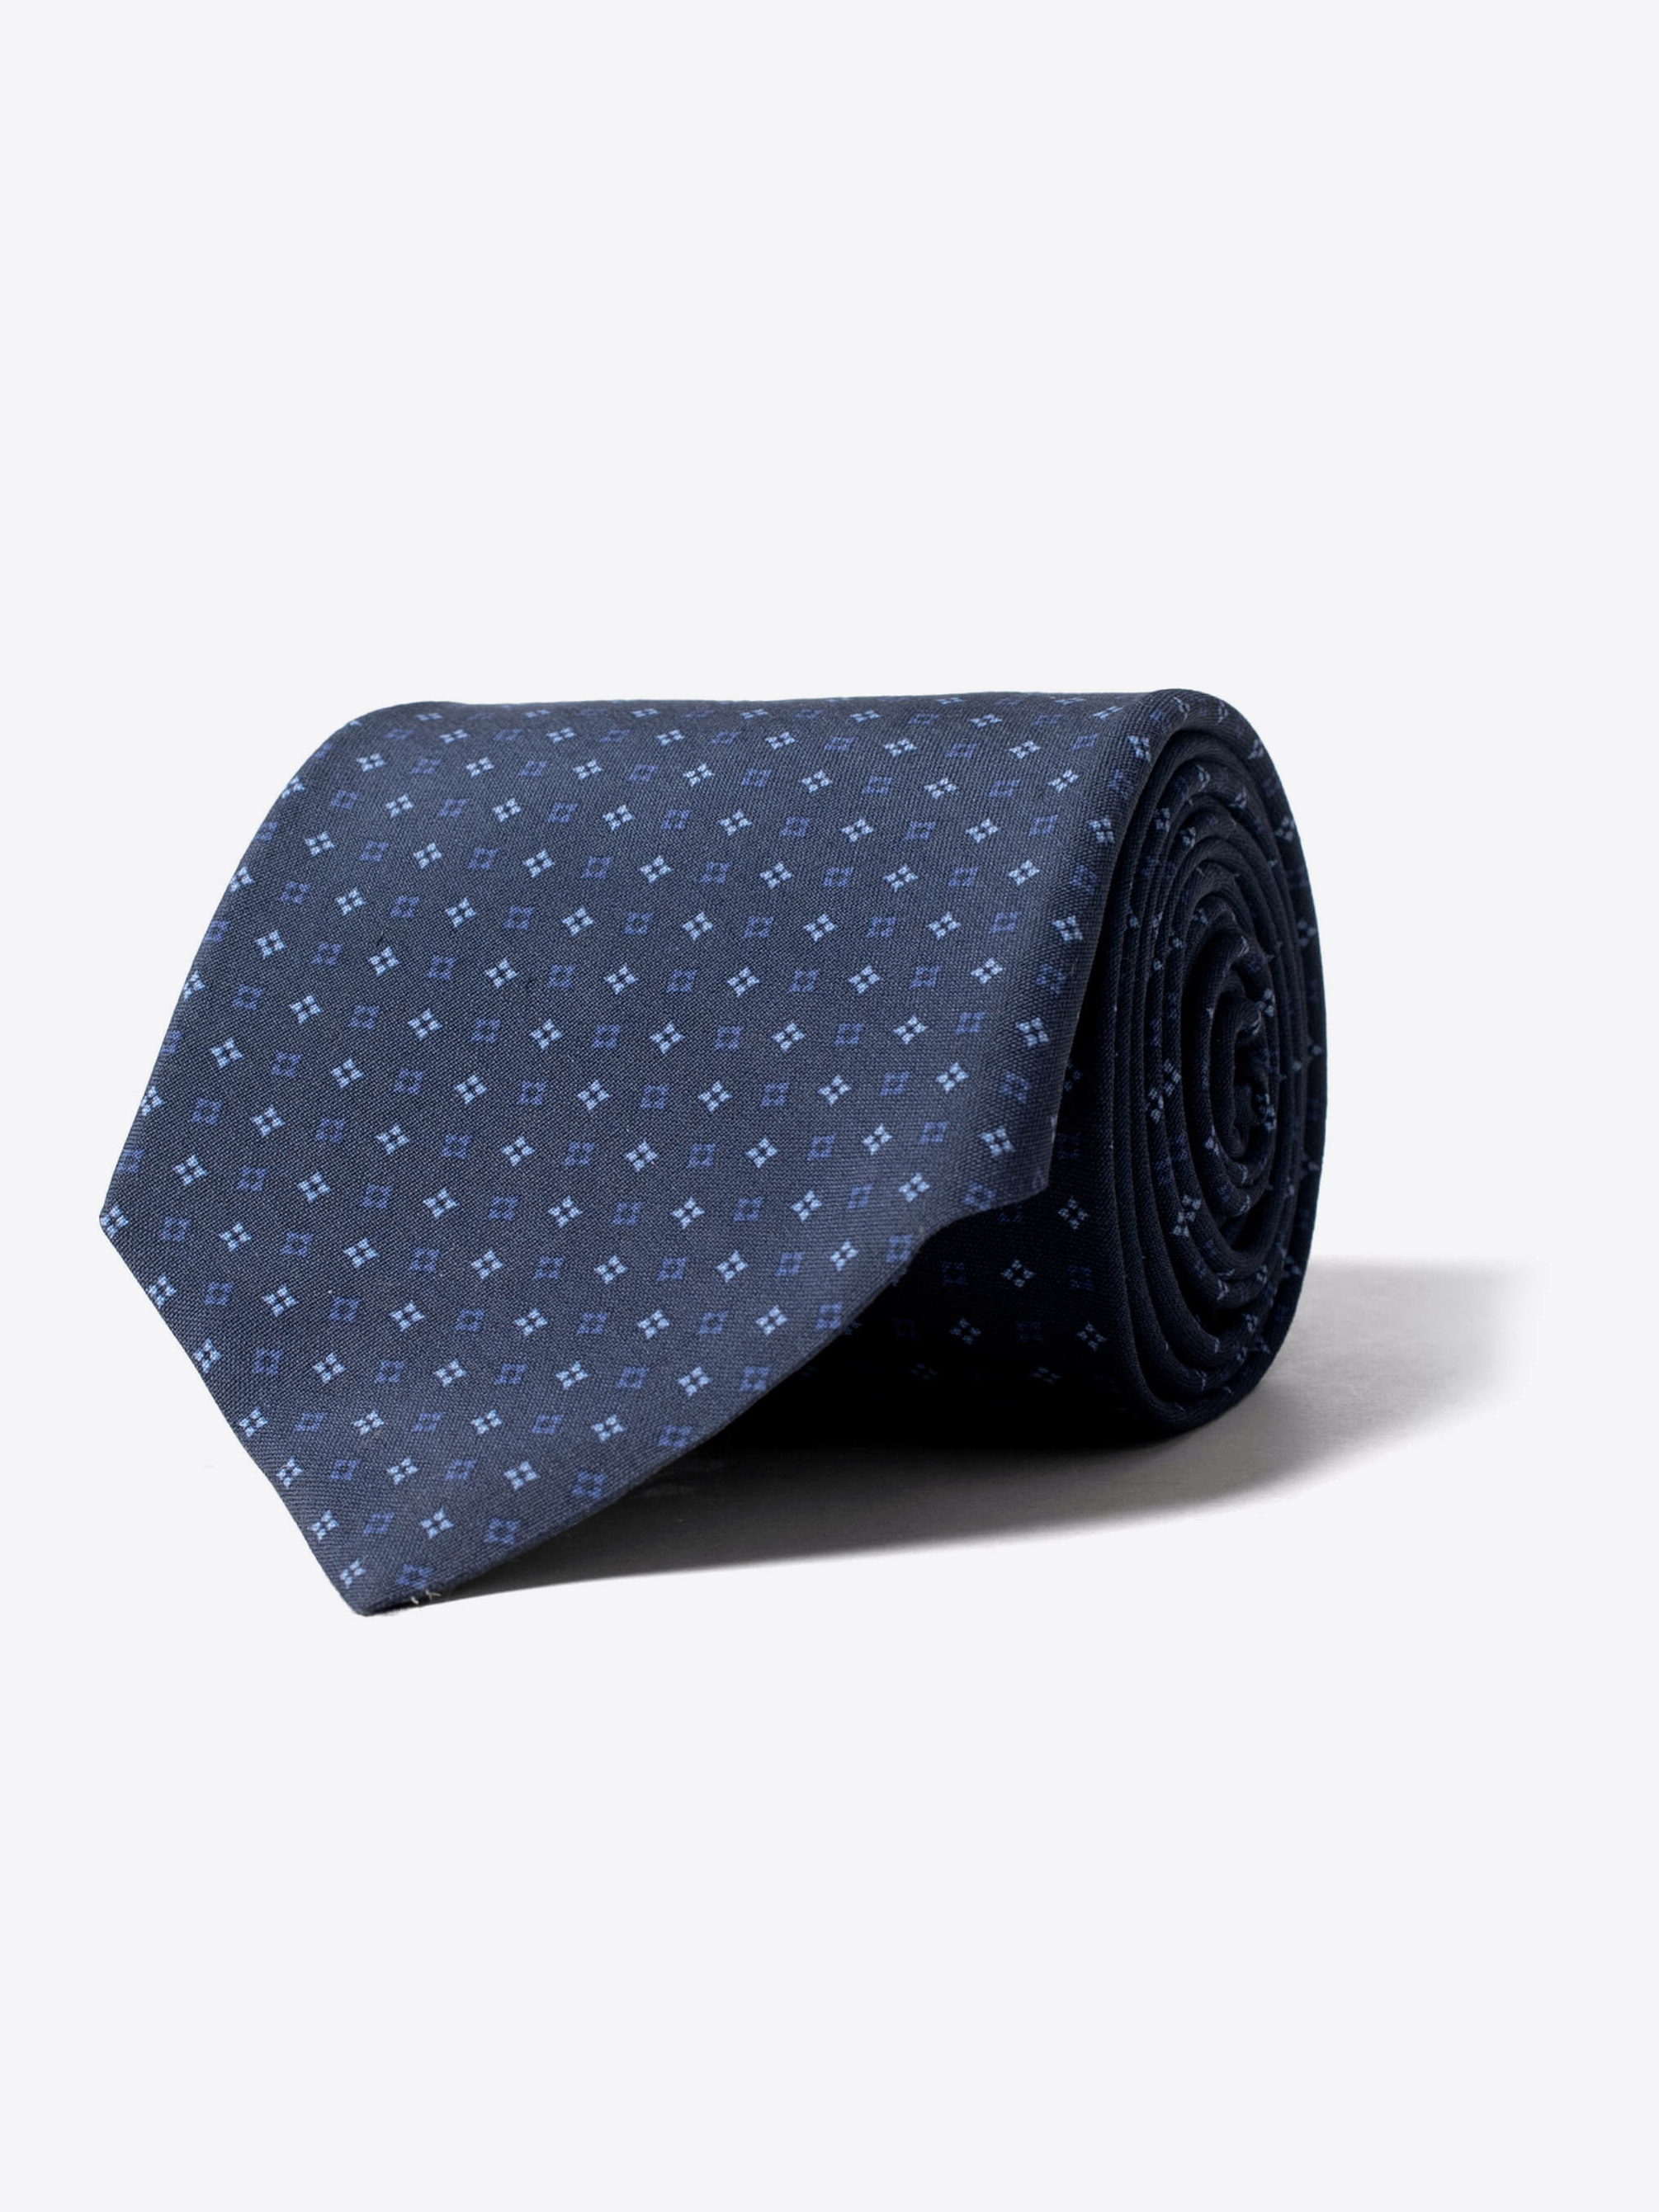 Zoom Image of Slate Blue Tonal Foulard Silk Tie